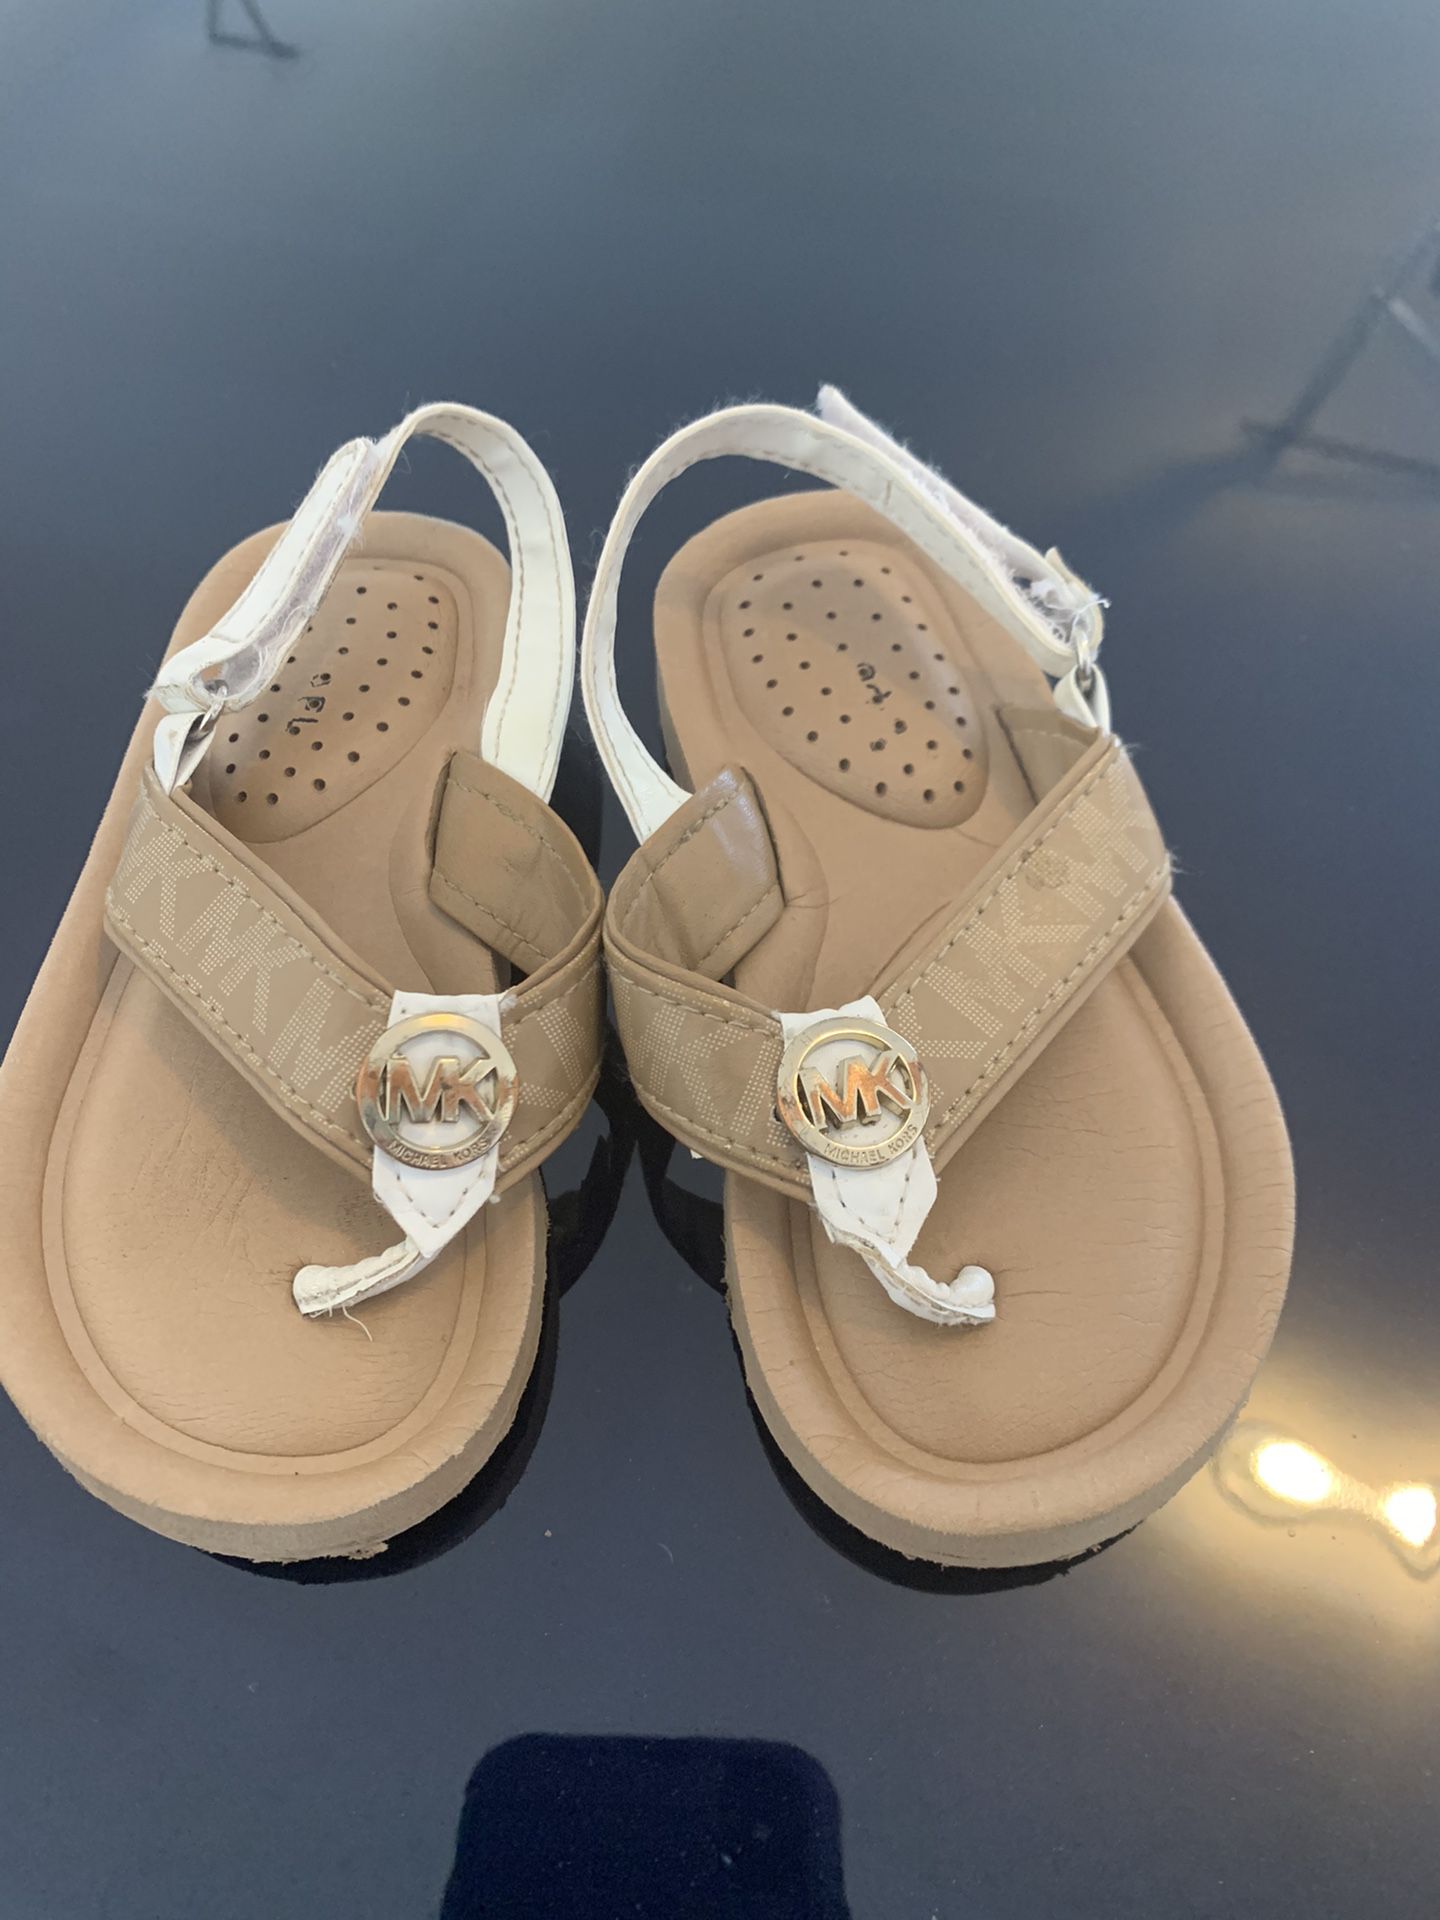 MK size 9 sandals $5 obo